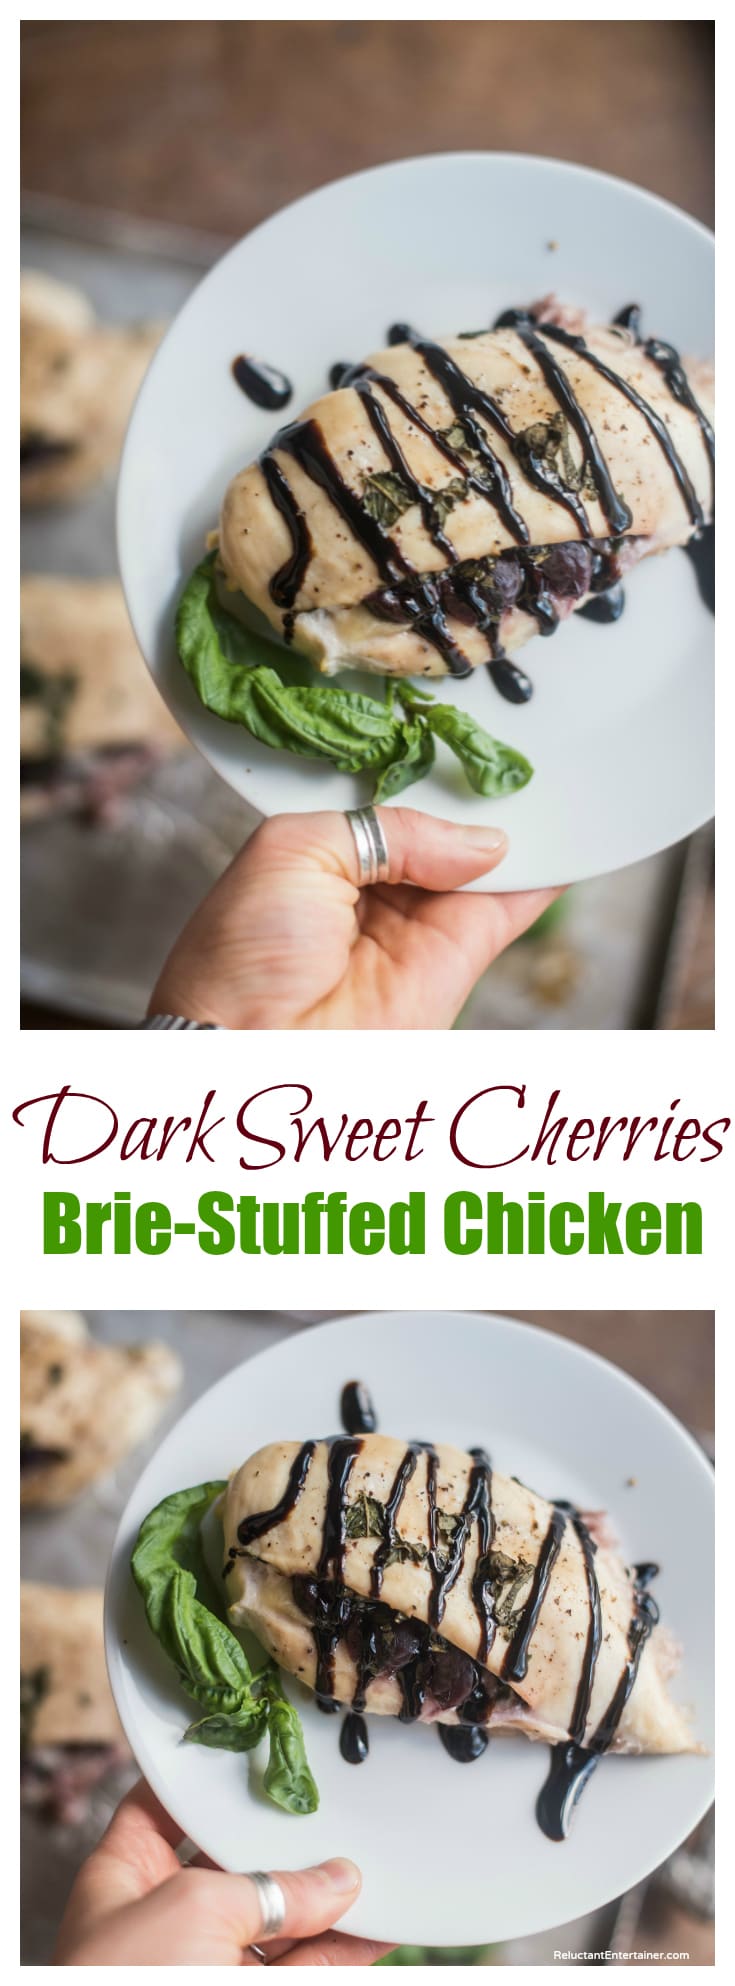 Dark Sweet Cherries Brie-Stuffed Chicken